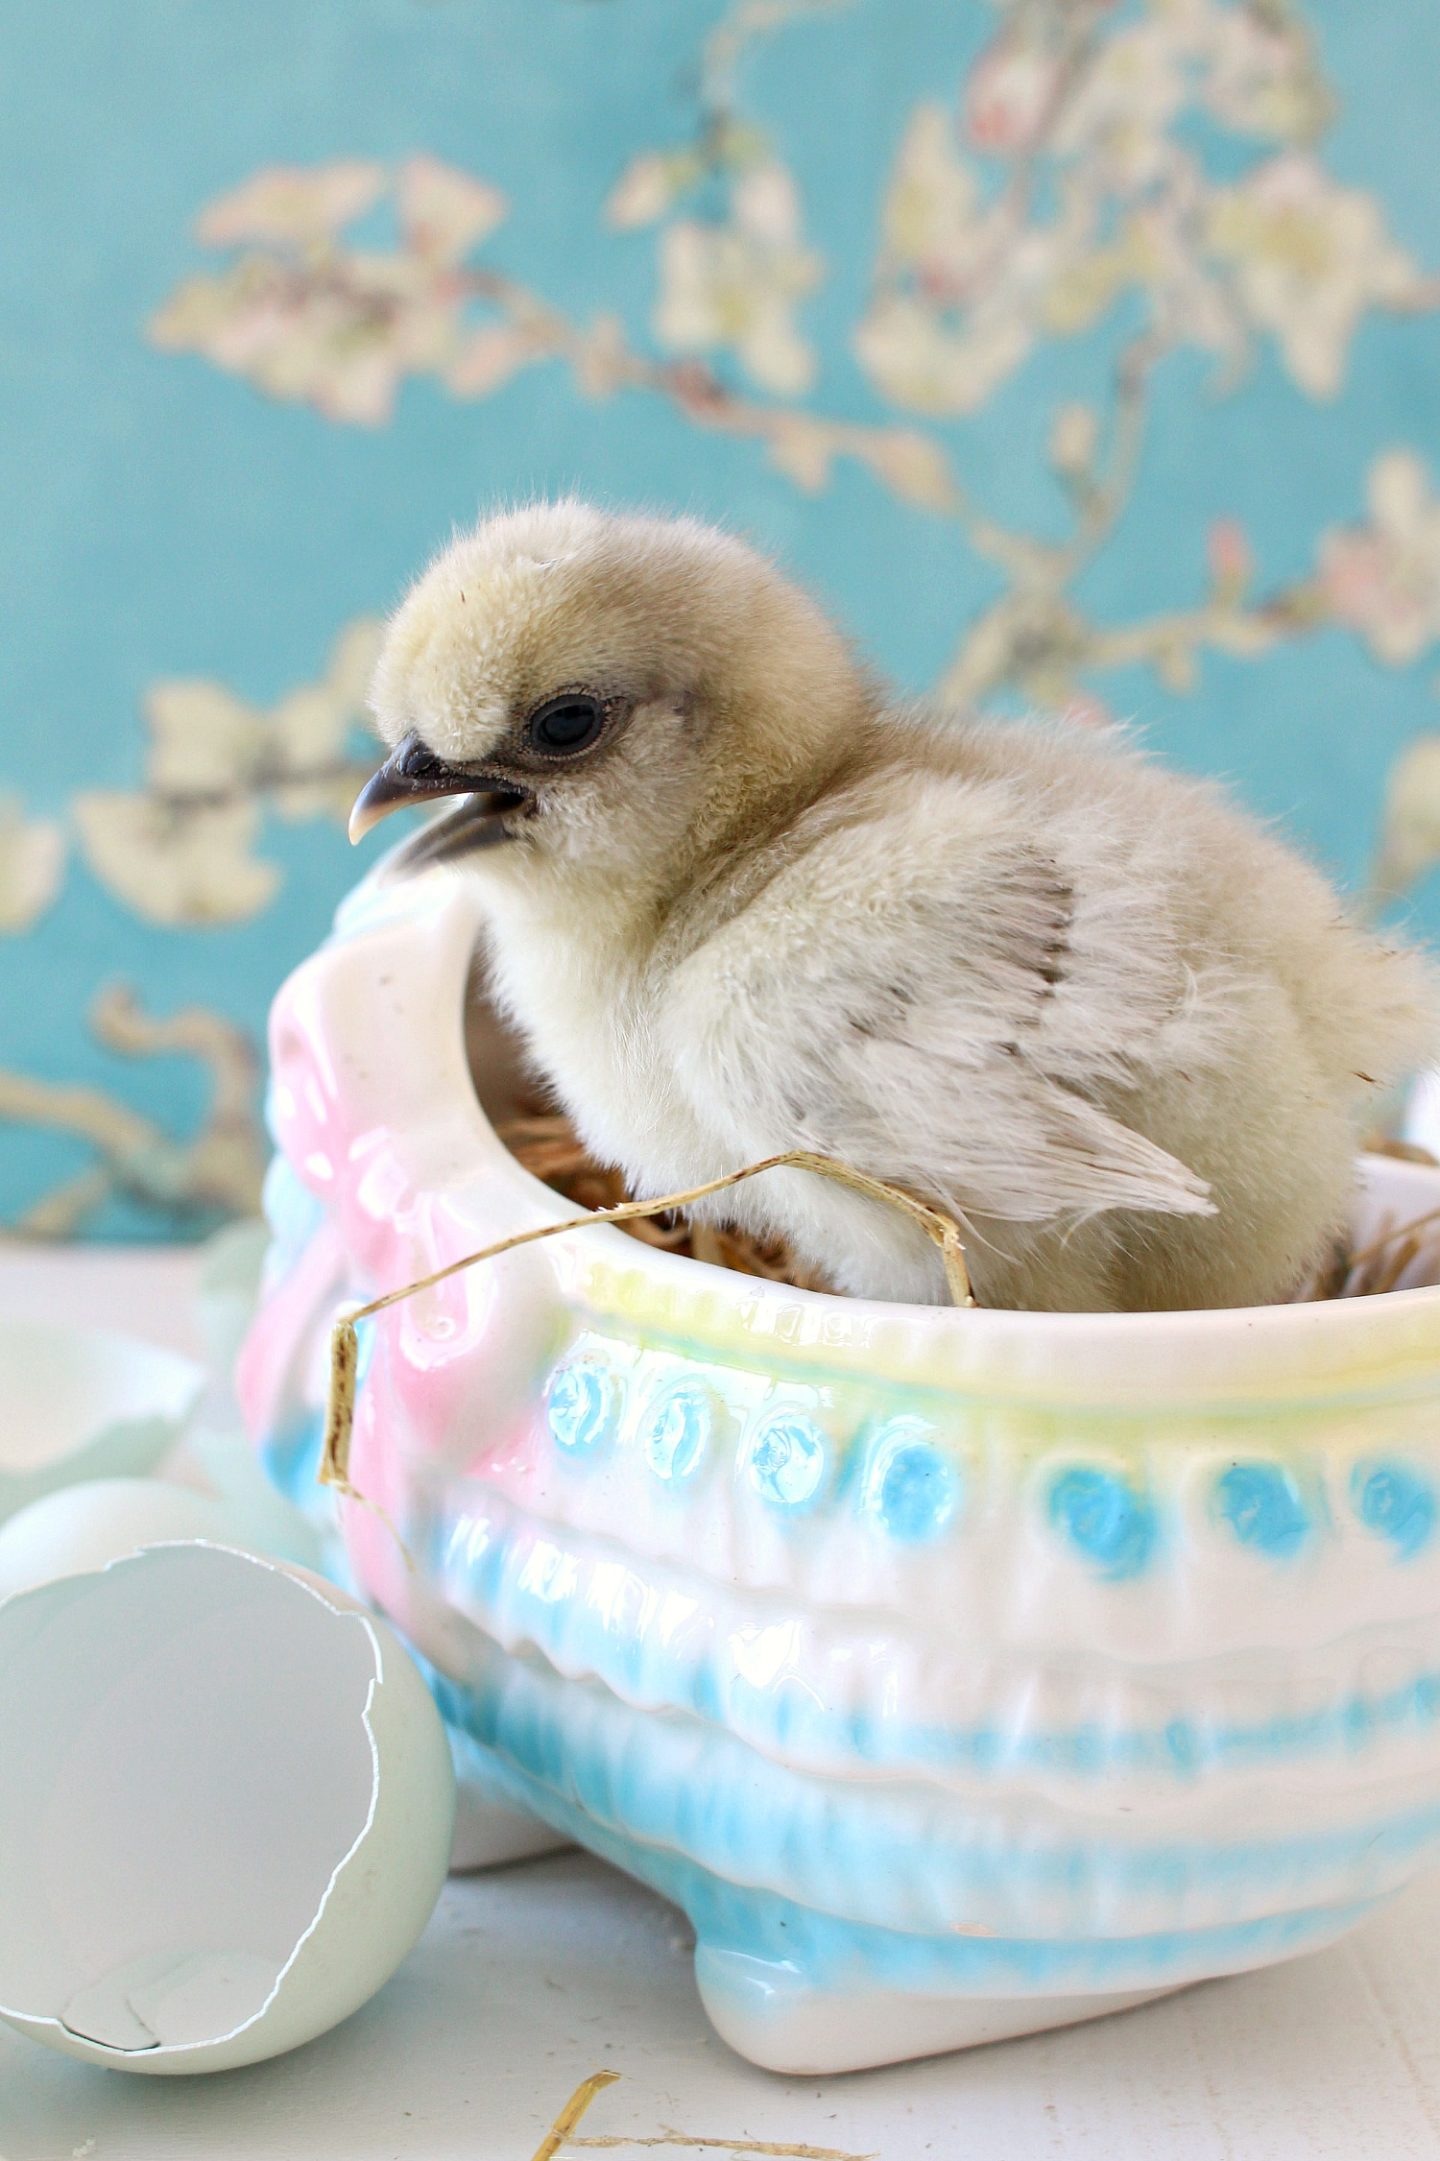 Spring Baby Chick Photos | We Got a New Batch of Chicks!